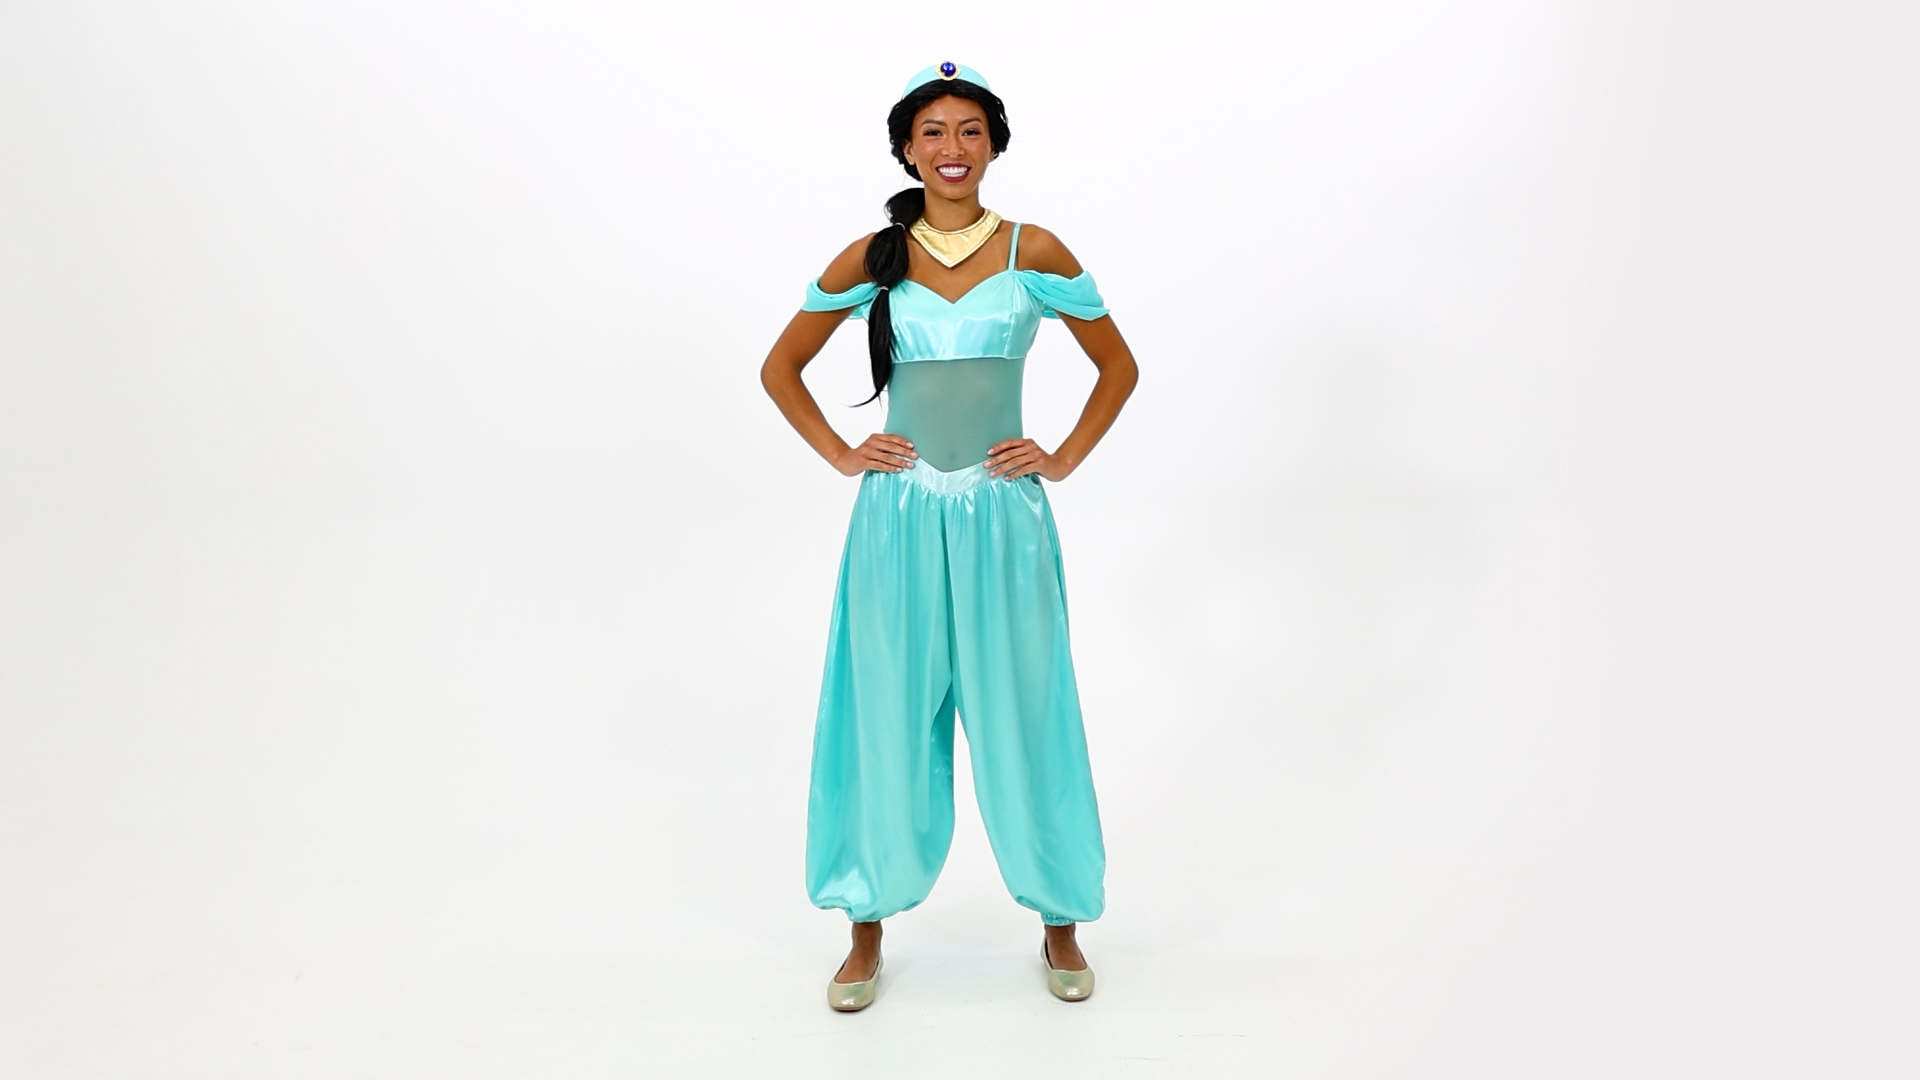 Exclusive Aladdin Women's Jasmine Costume